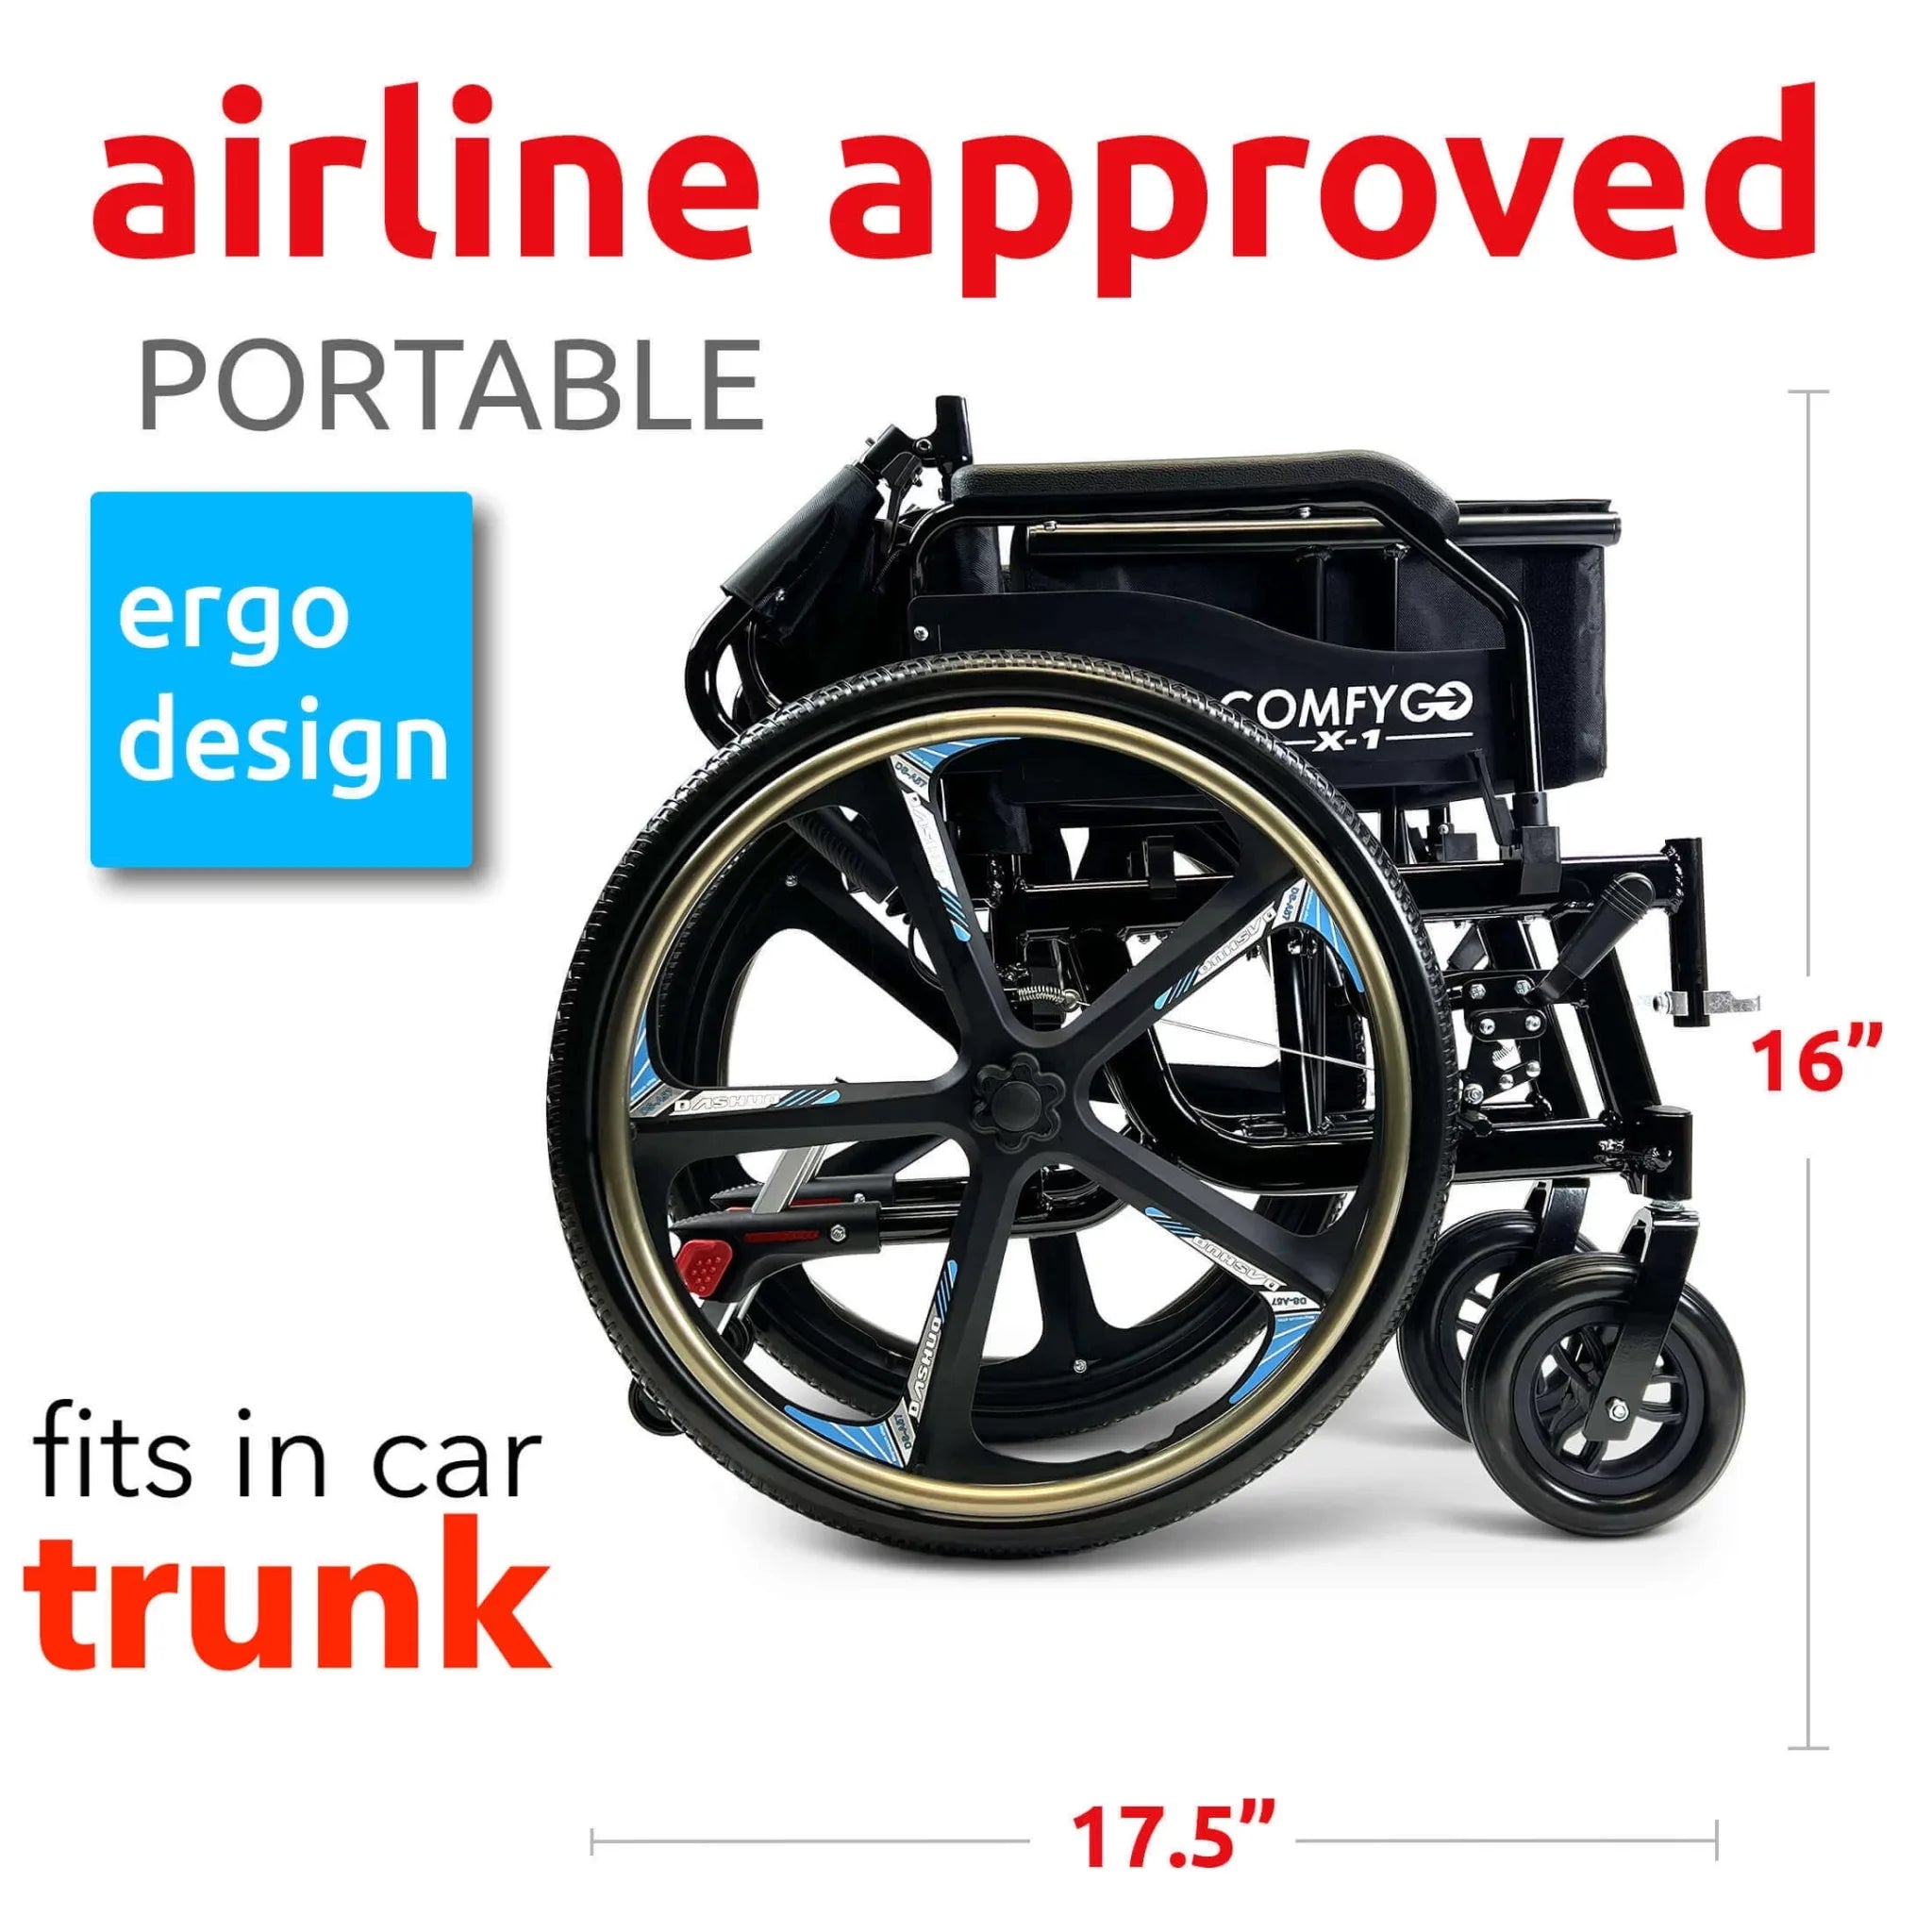 Shop Best Quality X1 Comfy Go Manual Wheelchair | DMG Medical Supply